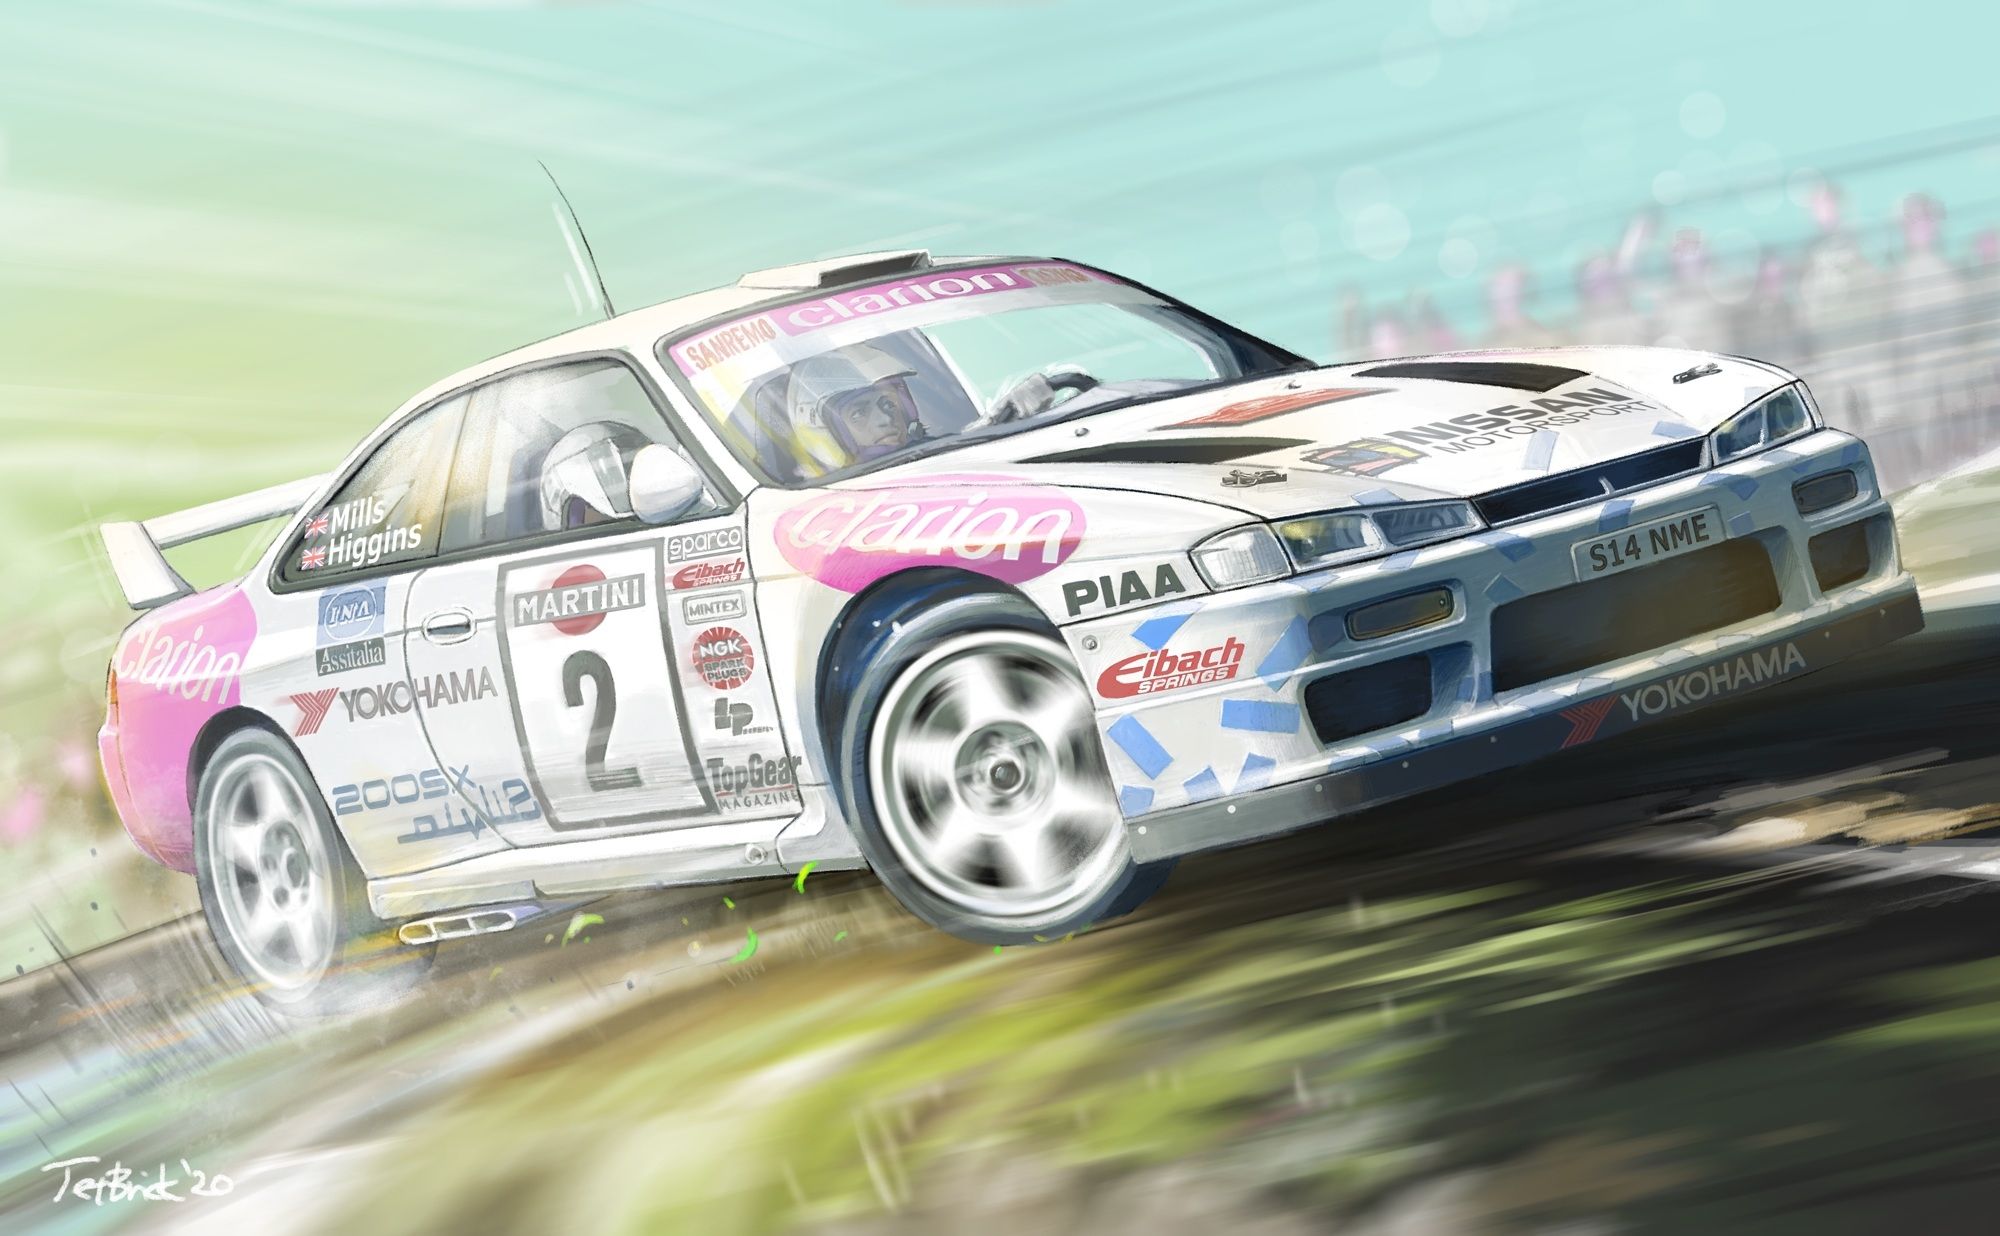 Download 2000x1236 Anime Racing Car .wallpapermaiden.com